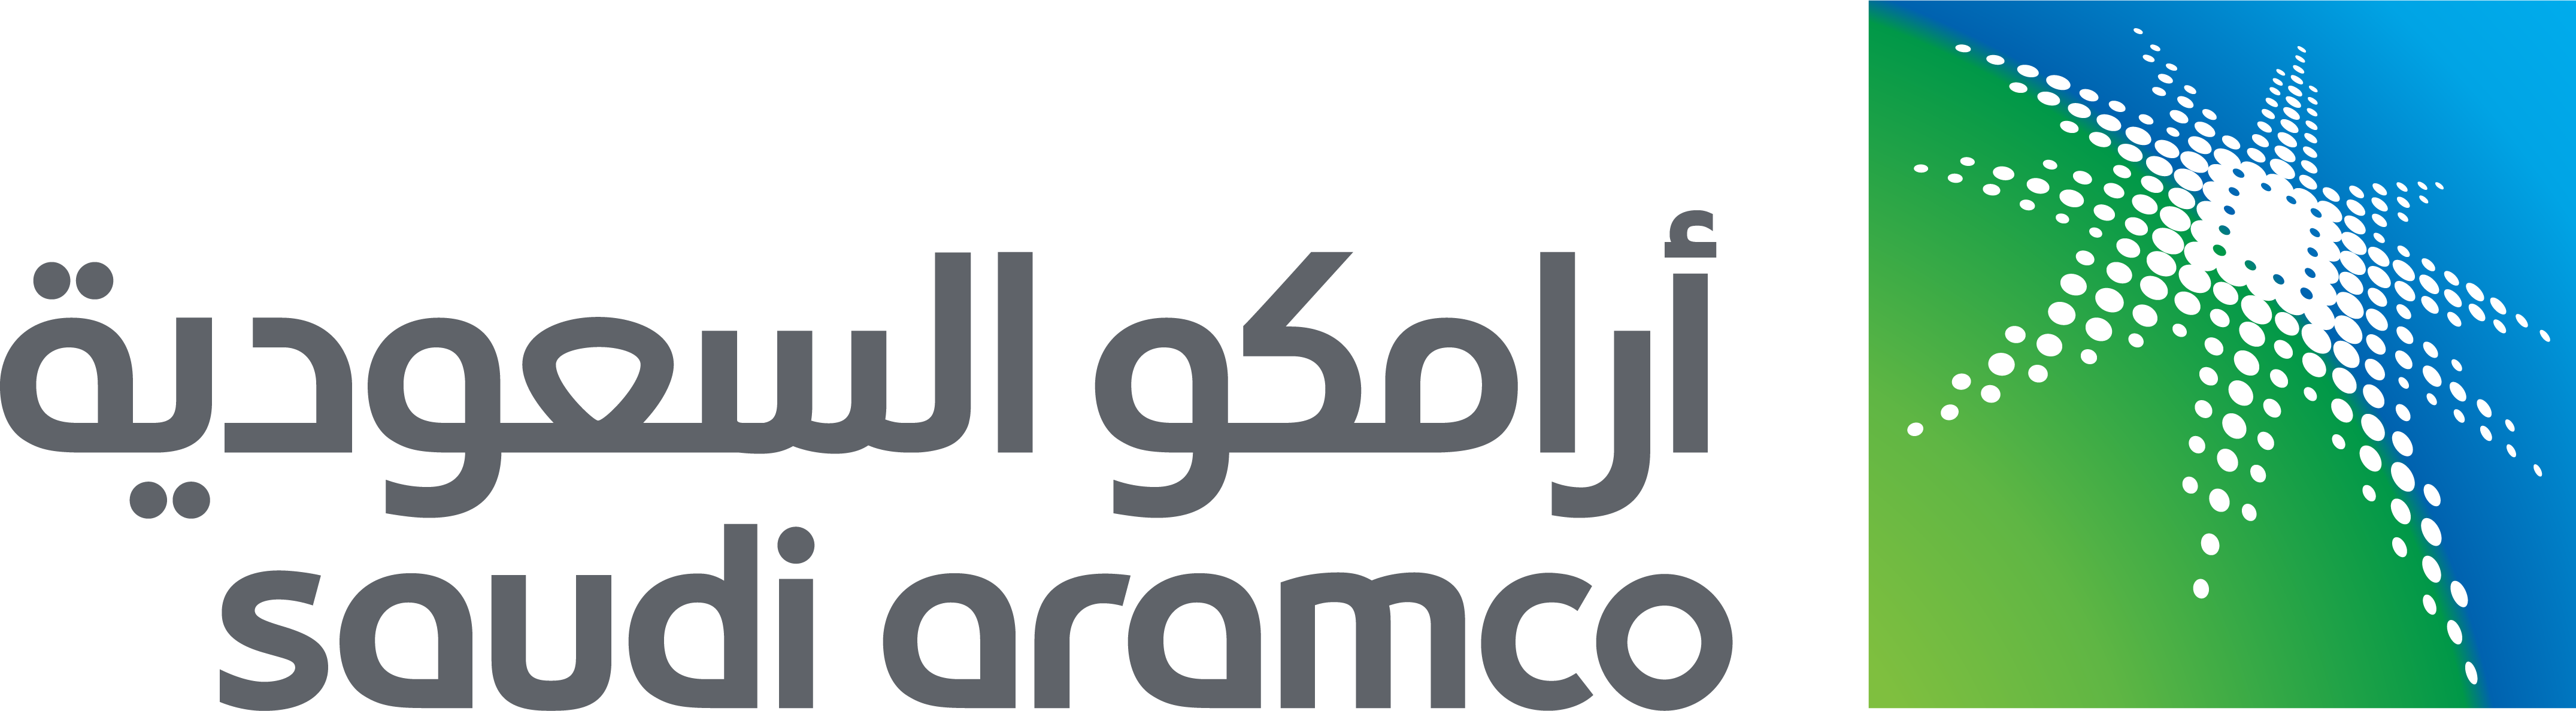 Saudi Aramco, Udhailiyah Laboratory Unit (ULU)